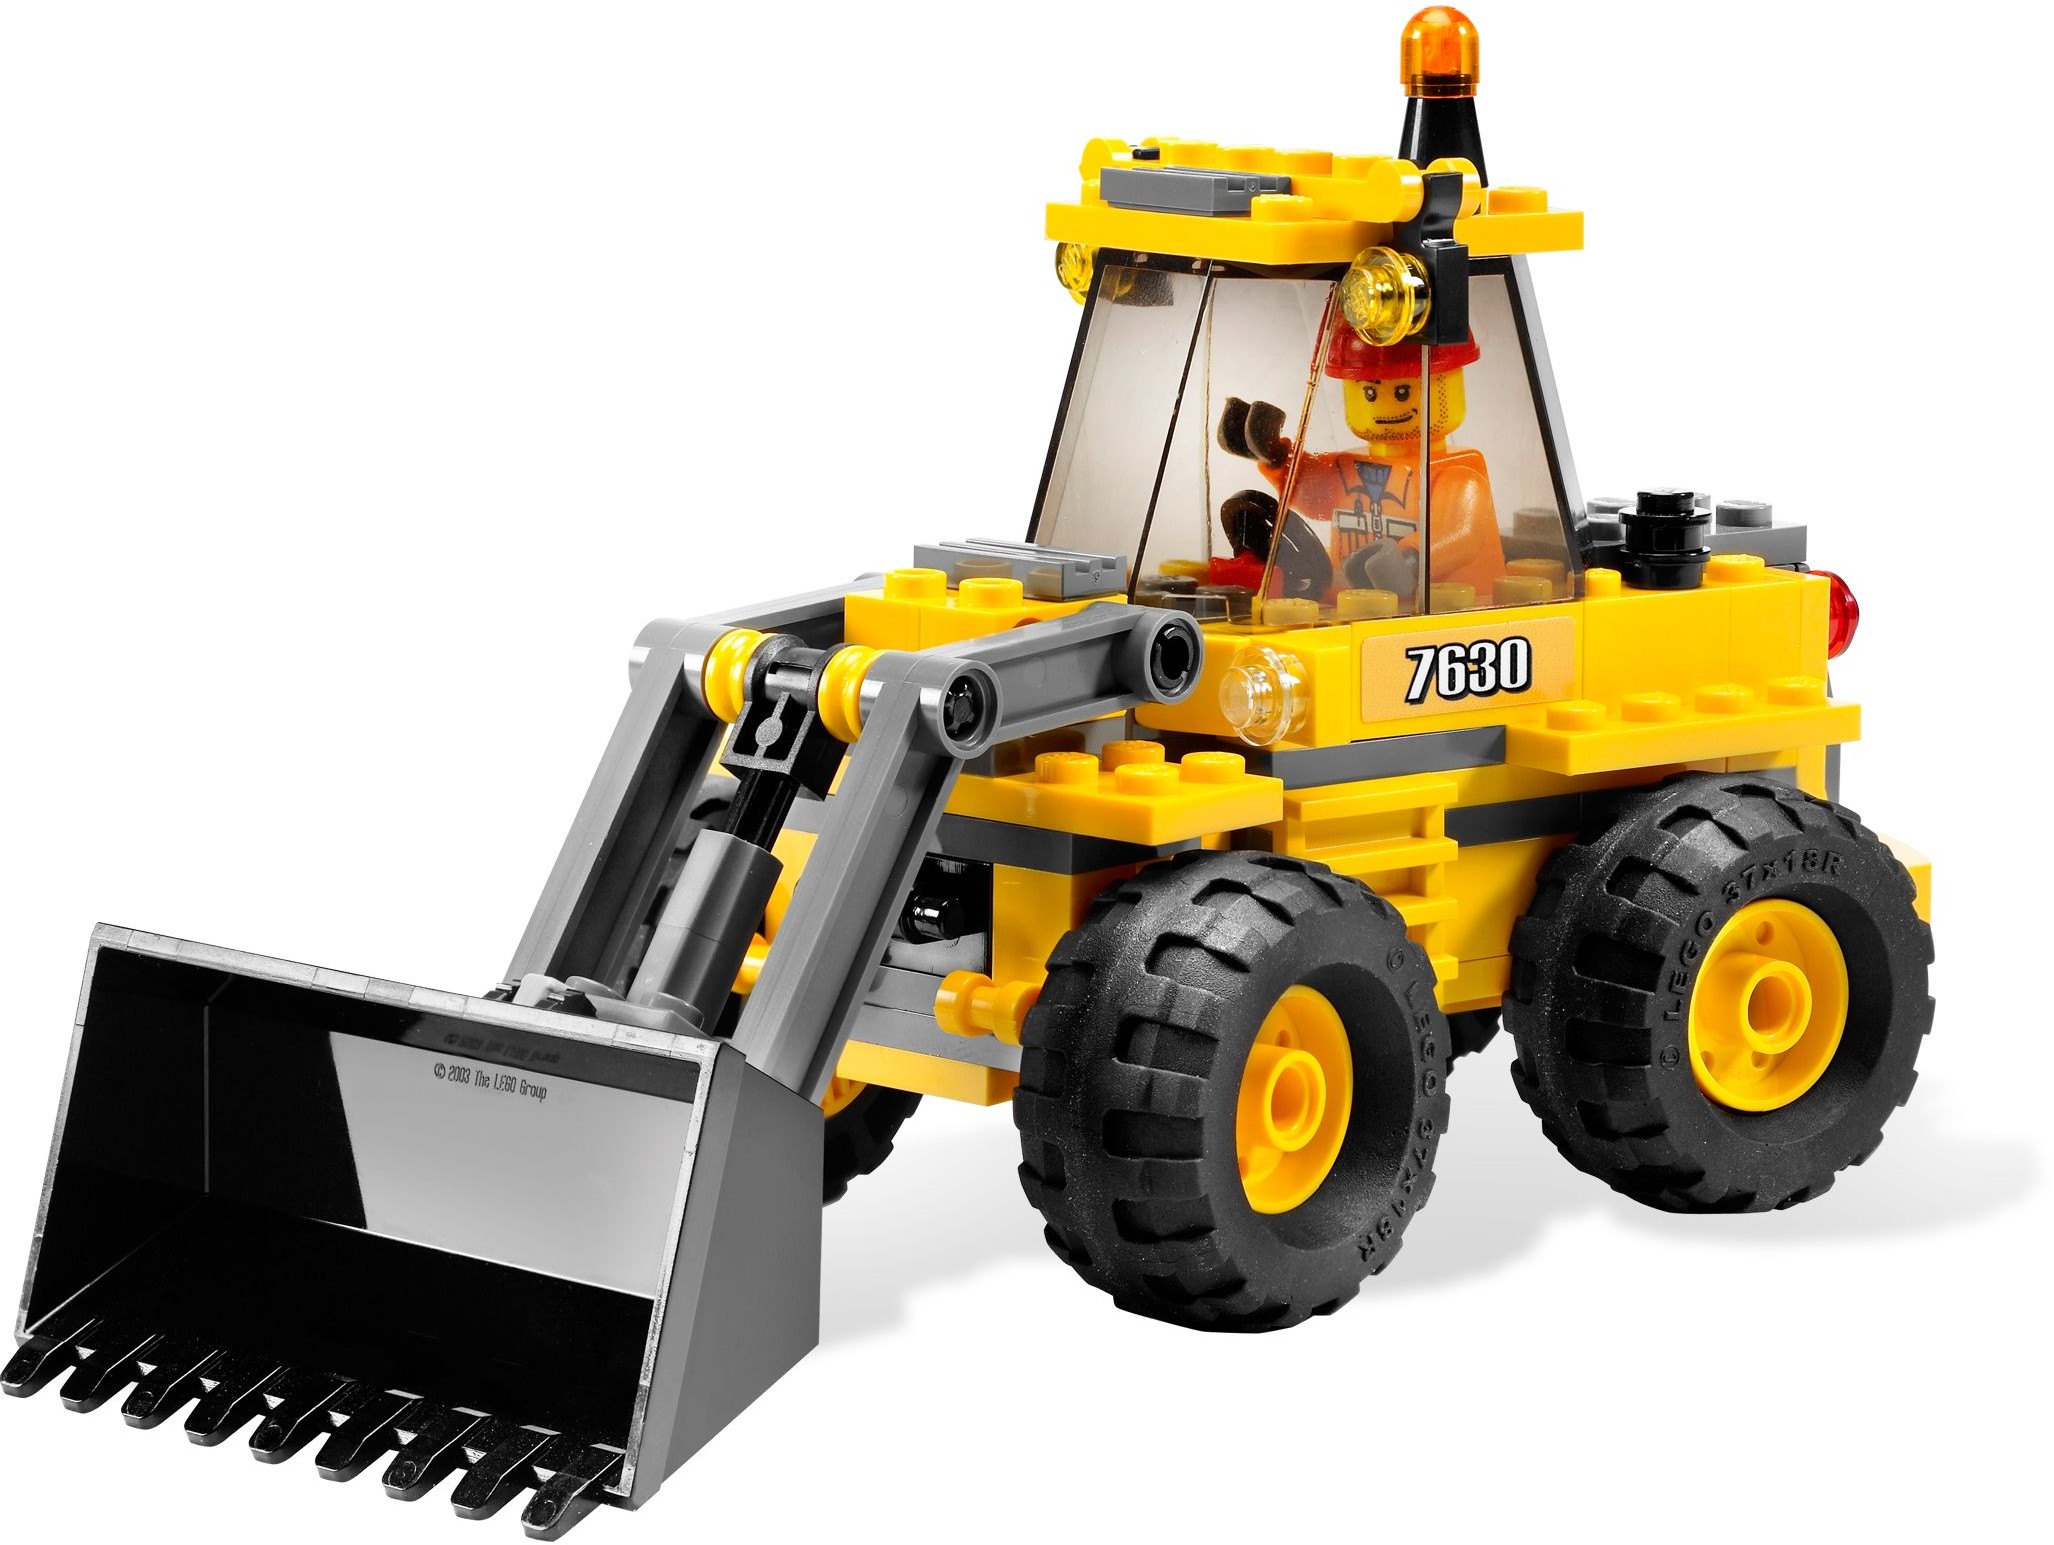 Lego Truck, Crane, Loader, Excavator, Digger - Lego Construction Site